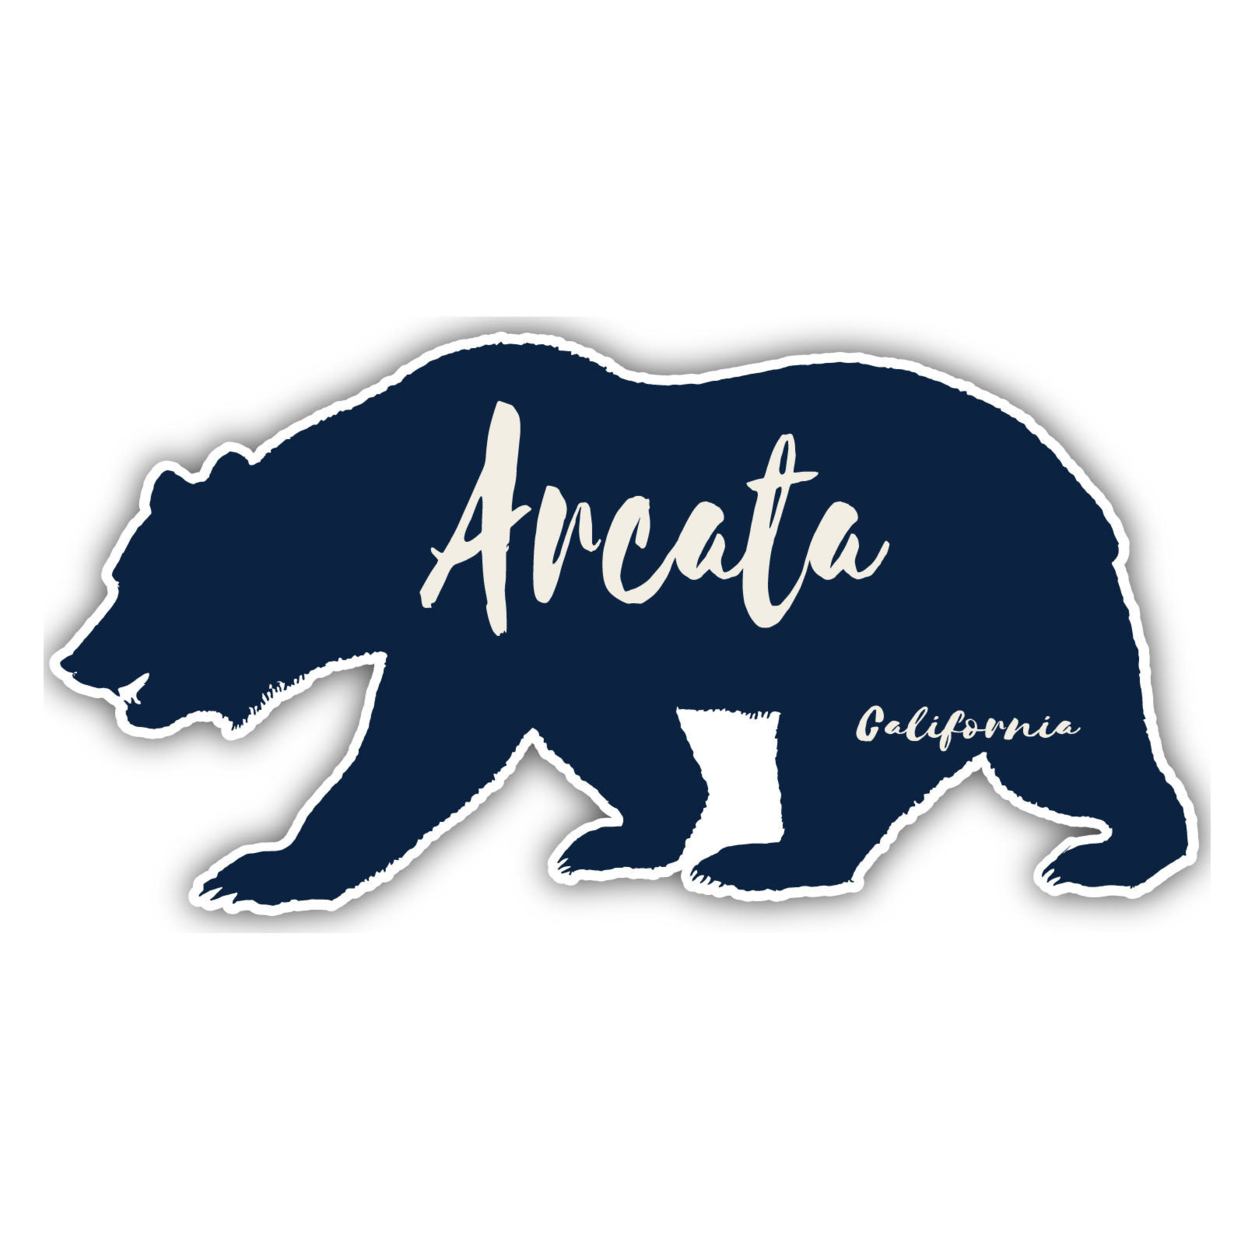 Arcata California Souvenir Decorative Stickers (Choose Theme And Size) - Single Unit, 4-Inch, Bear